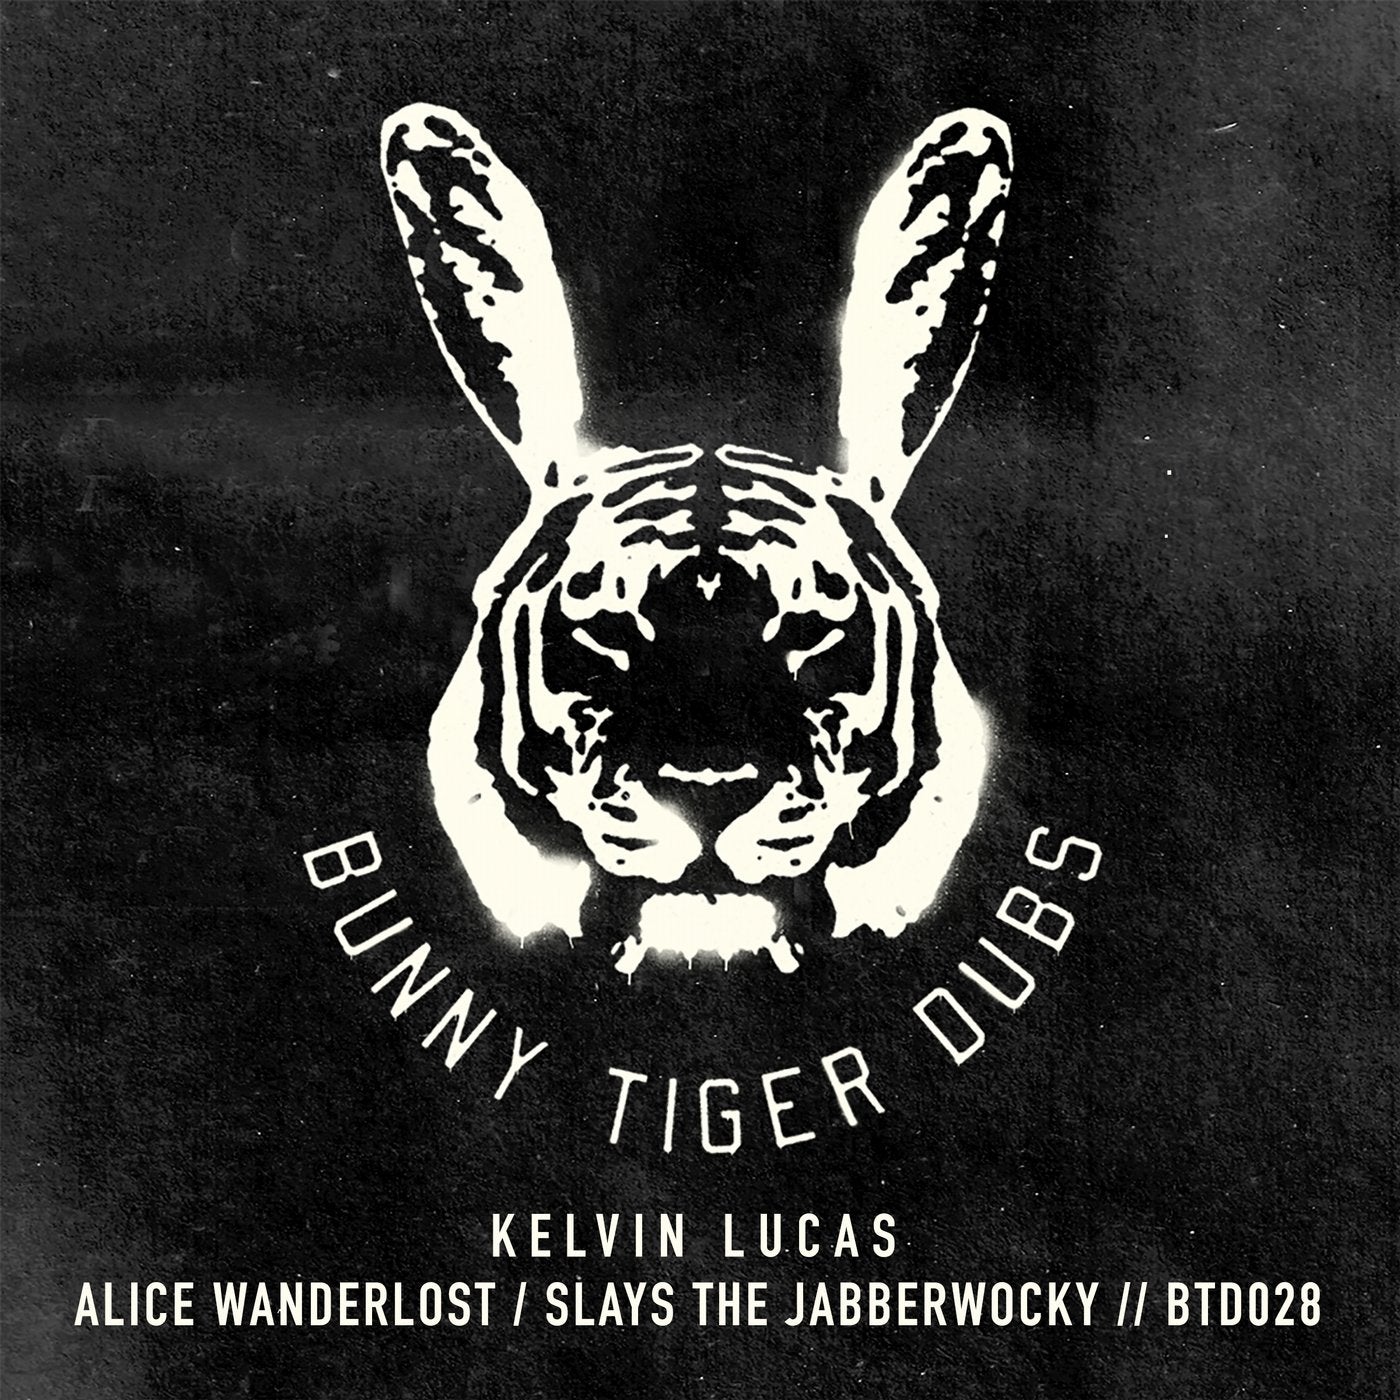 Alice Wanderlost / Slays The Jabberwocky